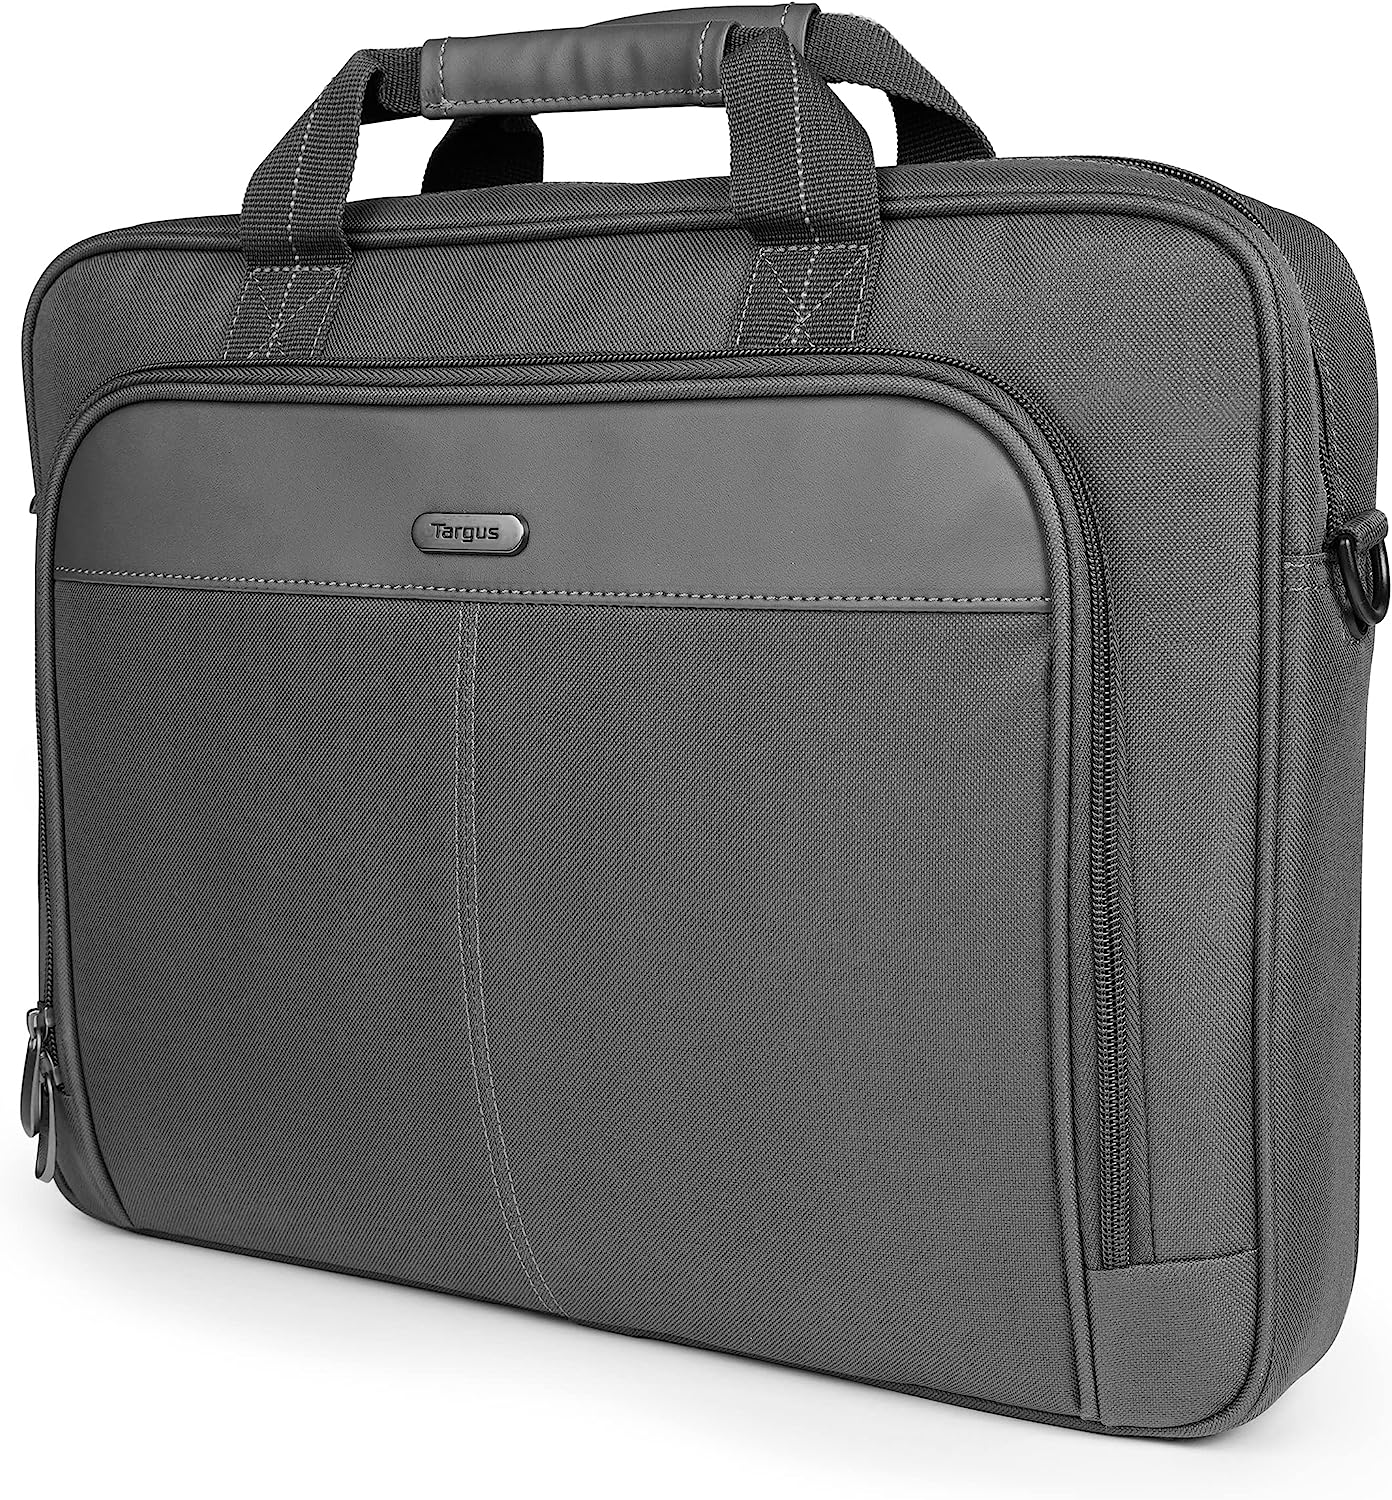 Targus Laptop Bag Classic Slim Briefcase Messenger [...]